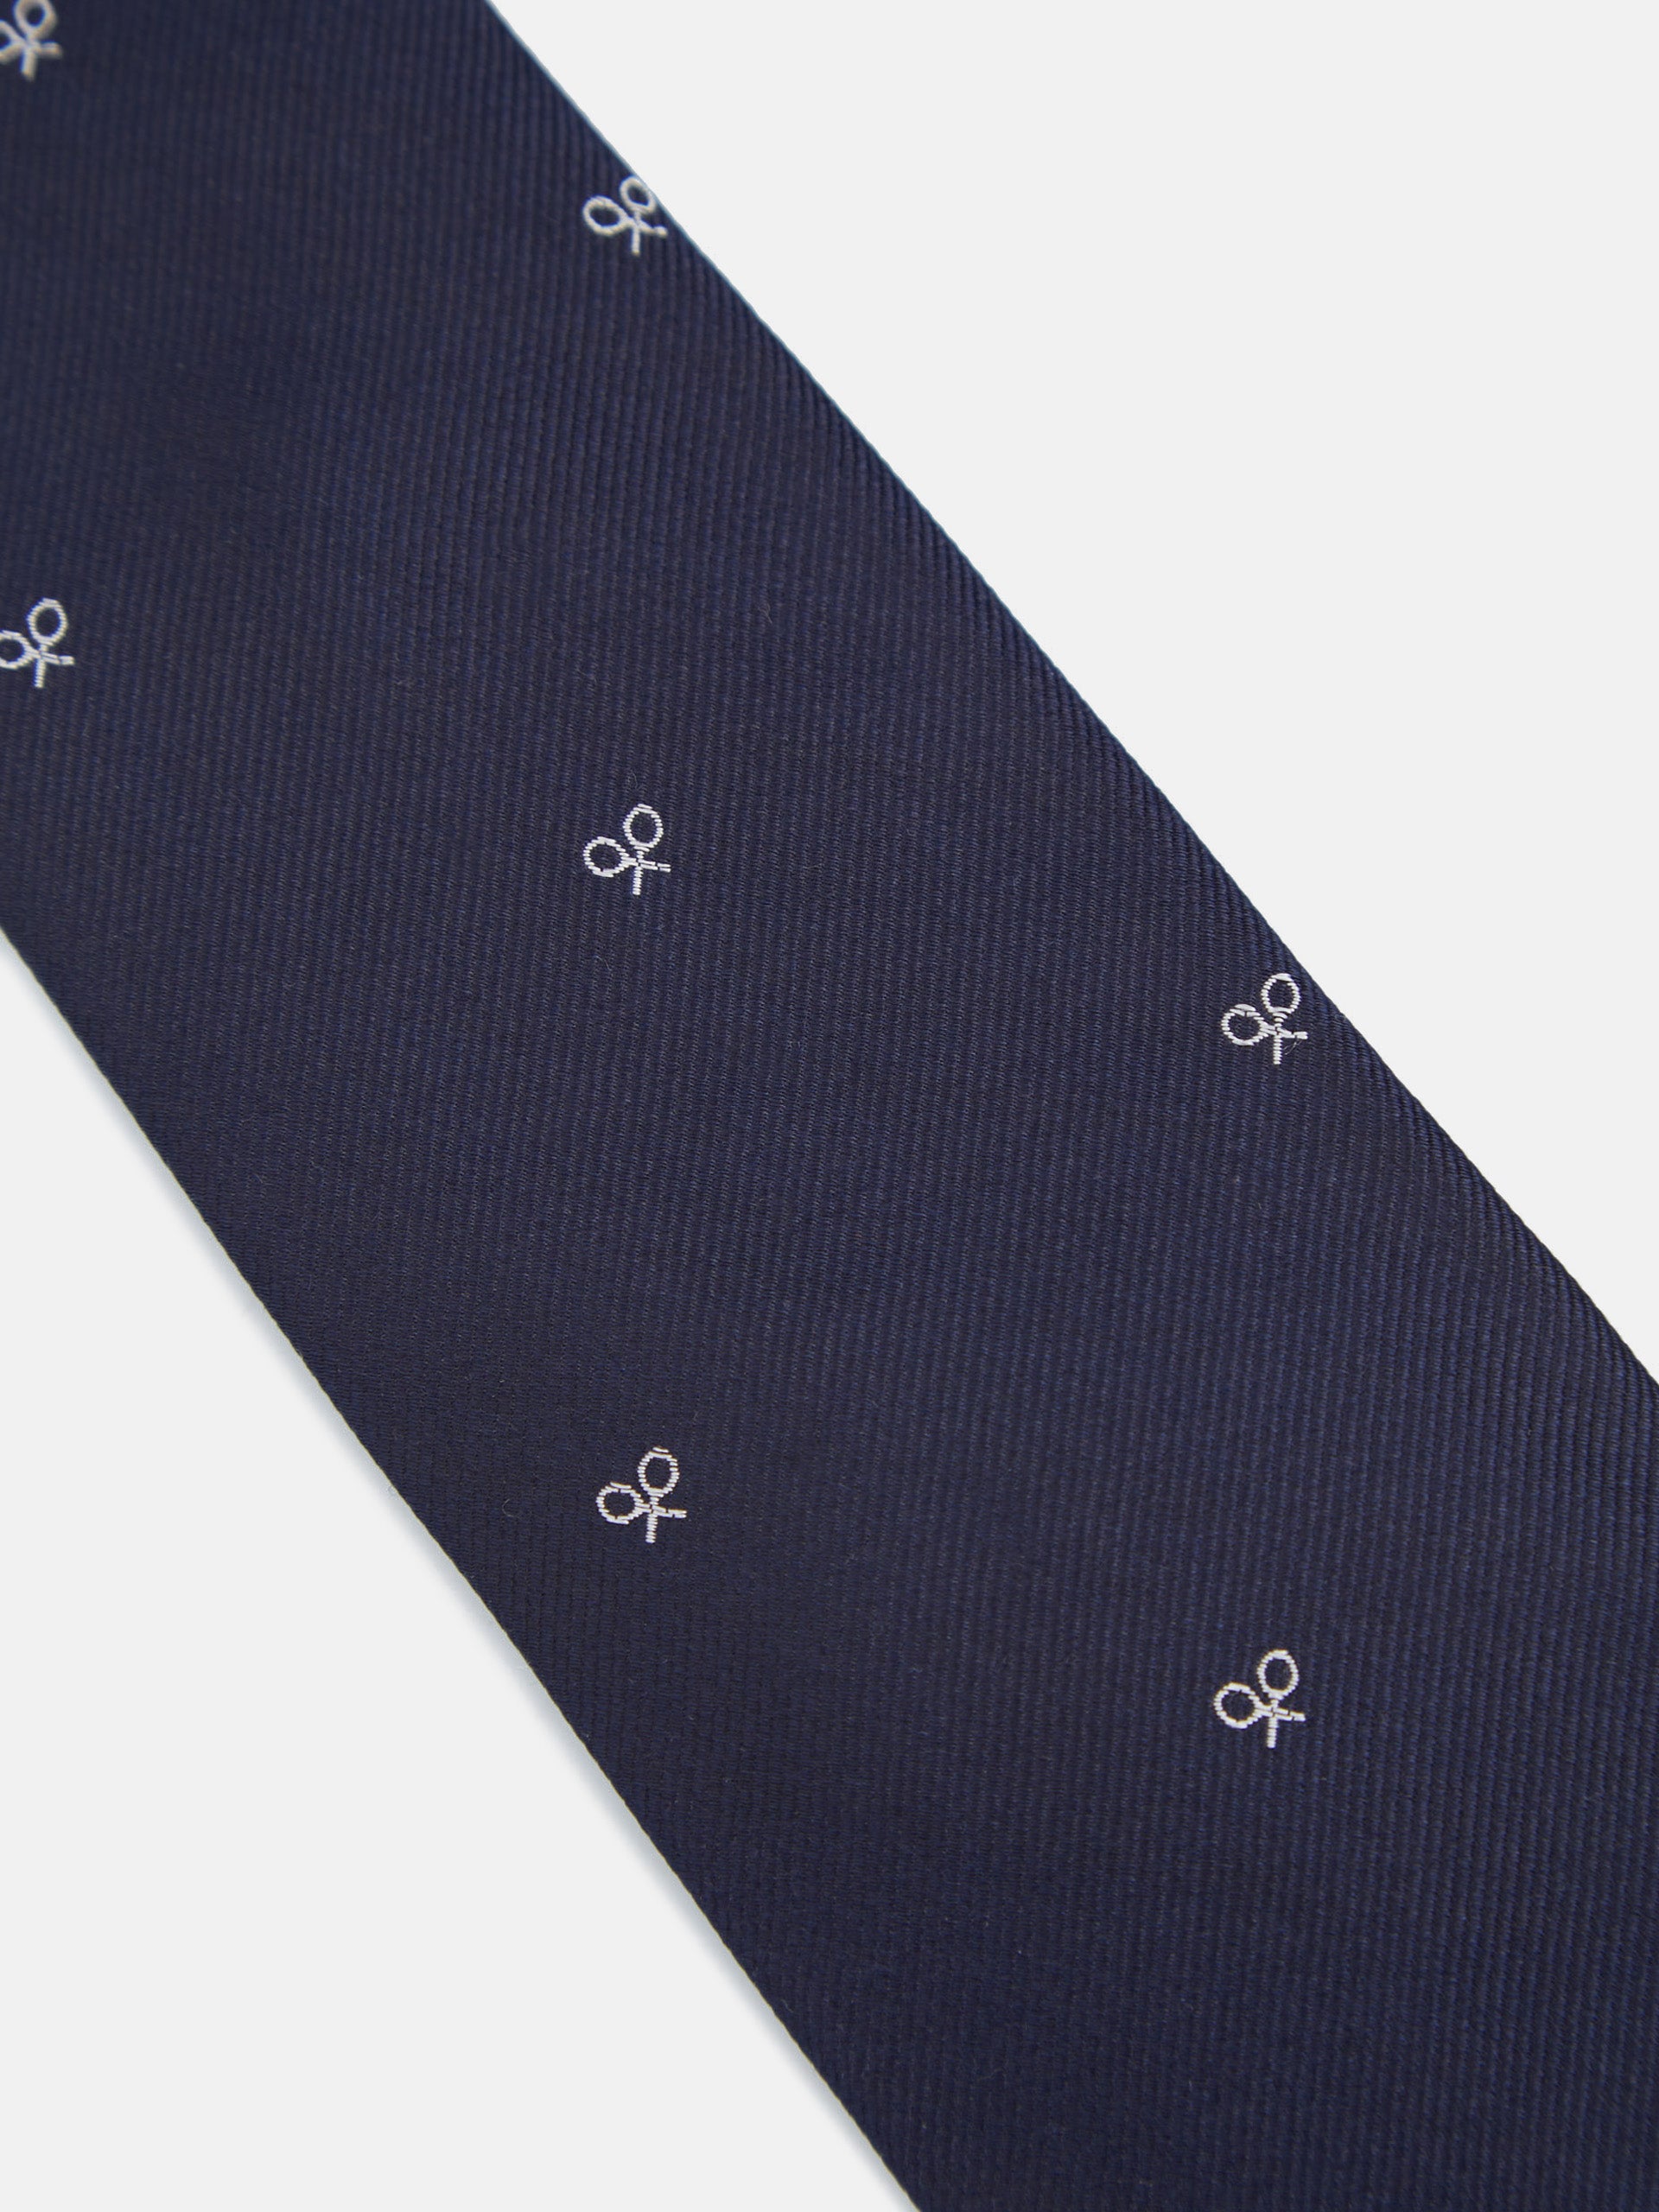 Silbon tie with navy blue racket motifs